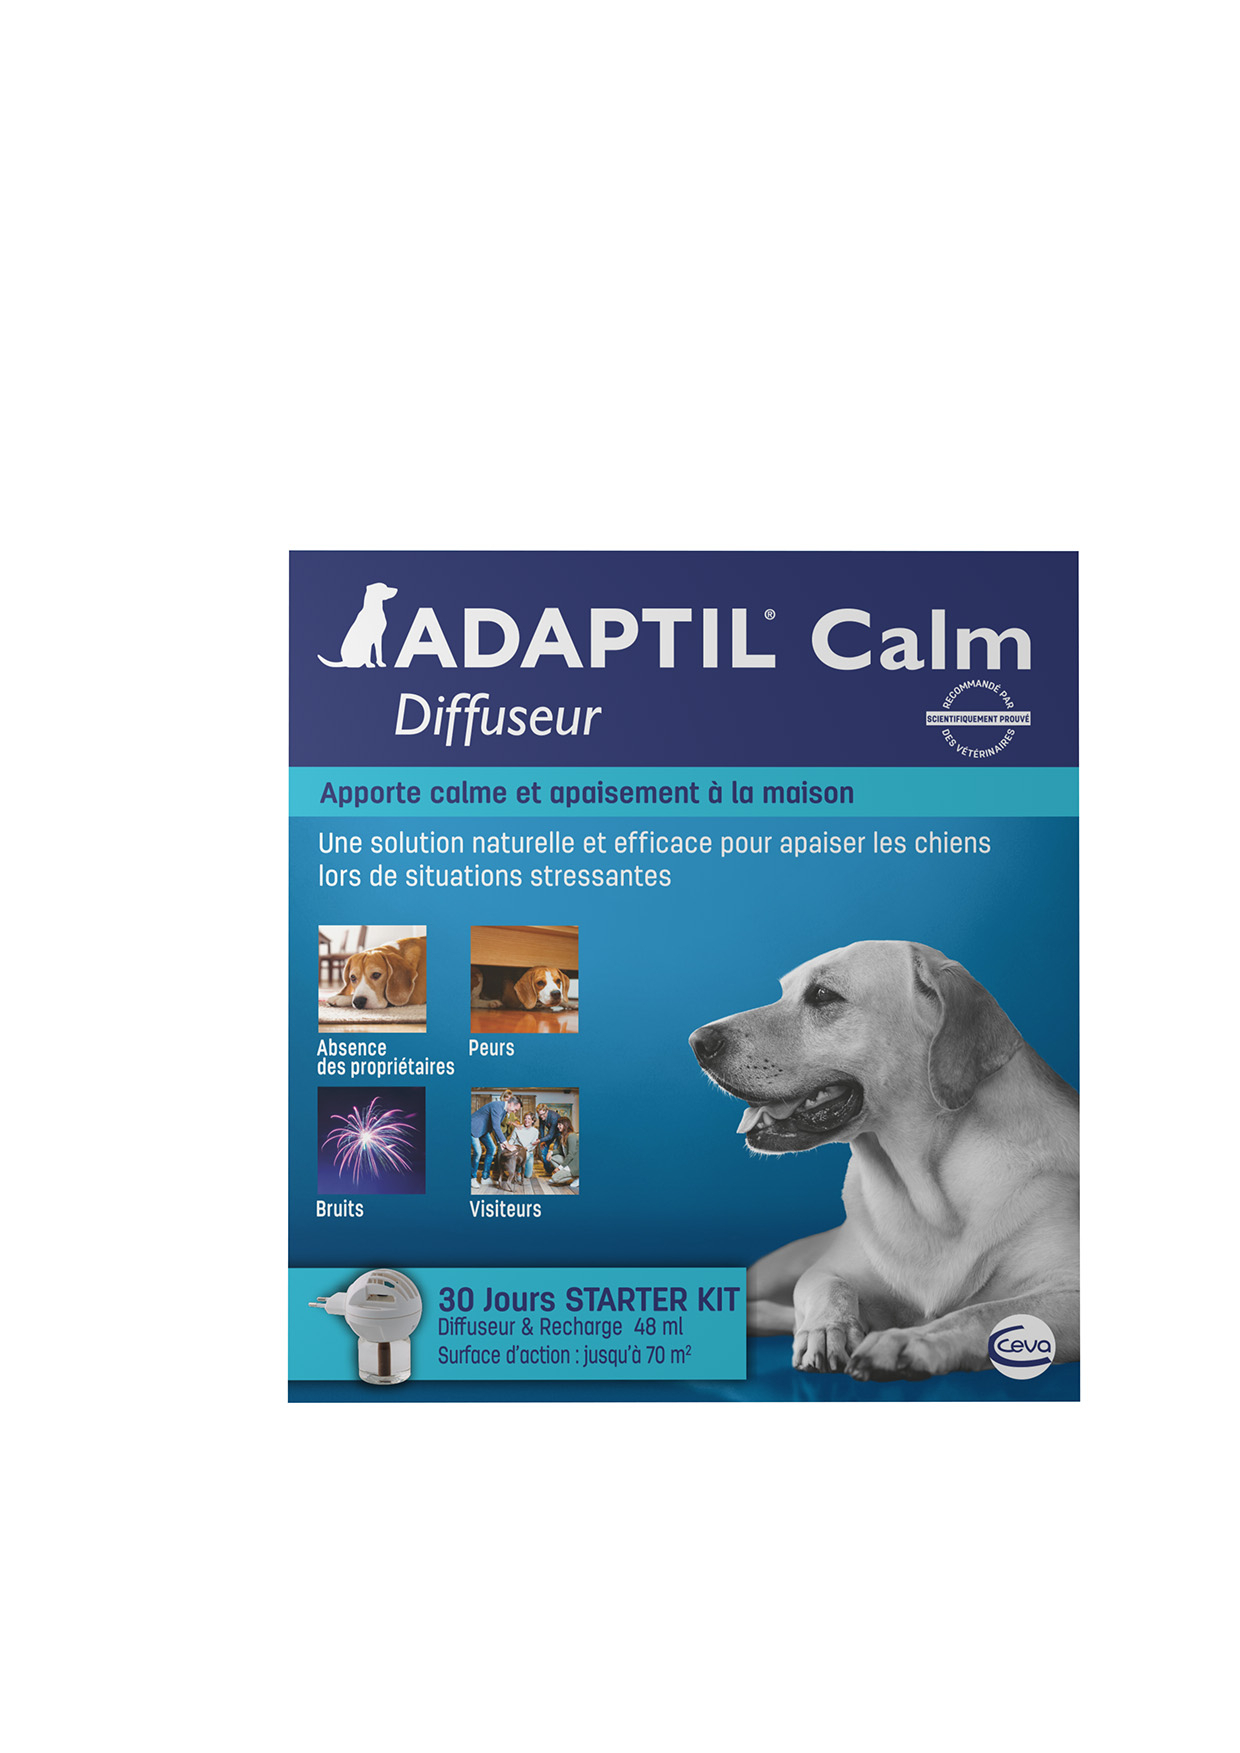 Adaptil Calm Diffusore anti-stress per cani